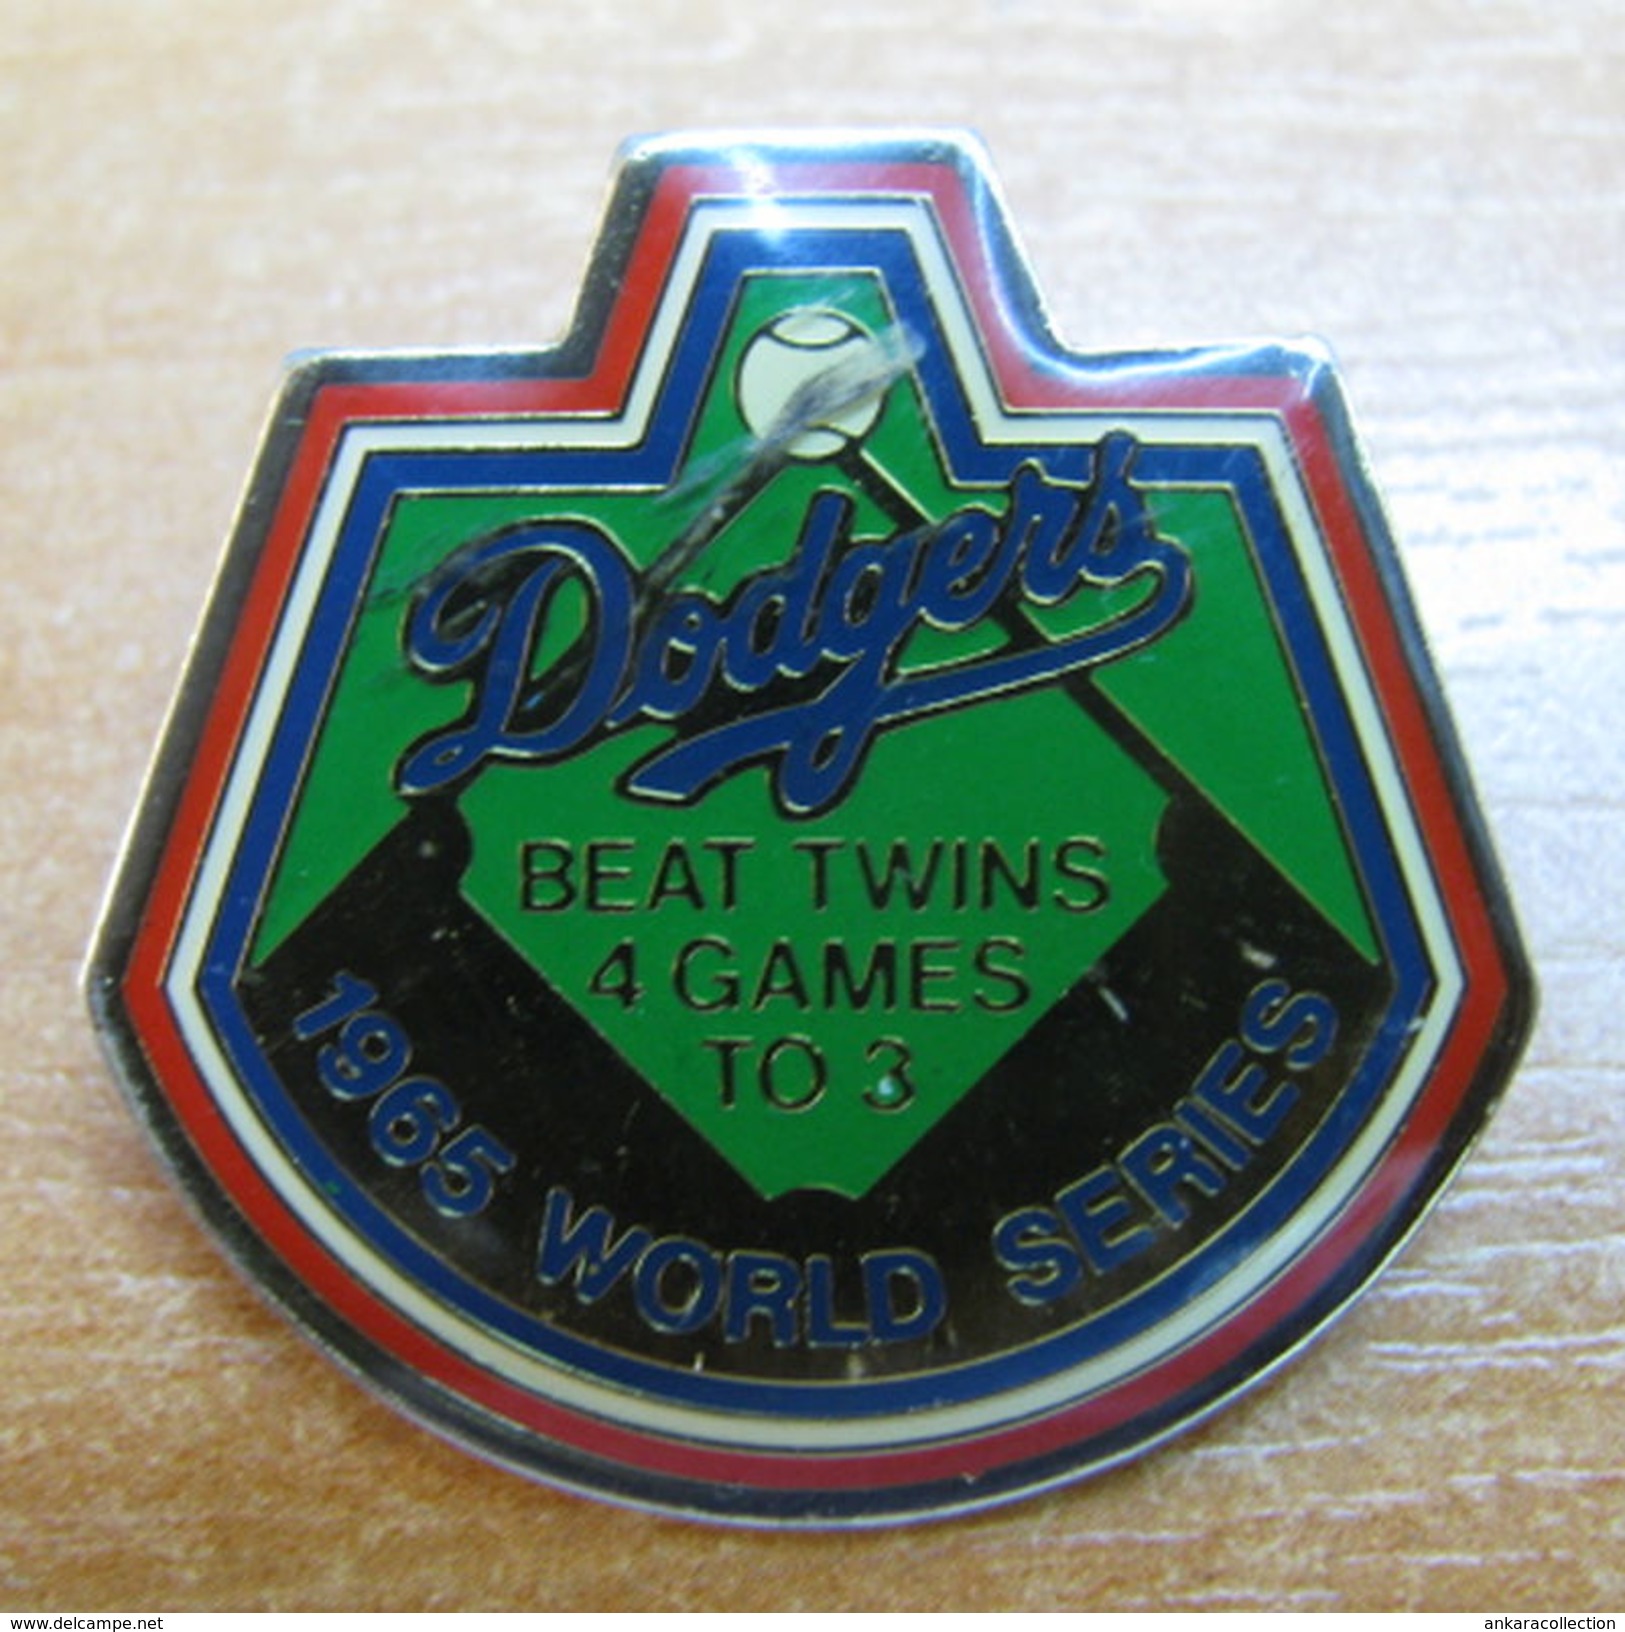 AC - DODGERS 1965 WORLD SERIES BEAT TWINS 4 GAMES TO 3  -L A DODGER  WORLD CHAMPIONSHIPS 1989 BASEBALL BADGES - PIN - Baseball